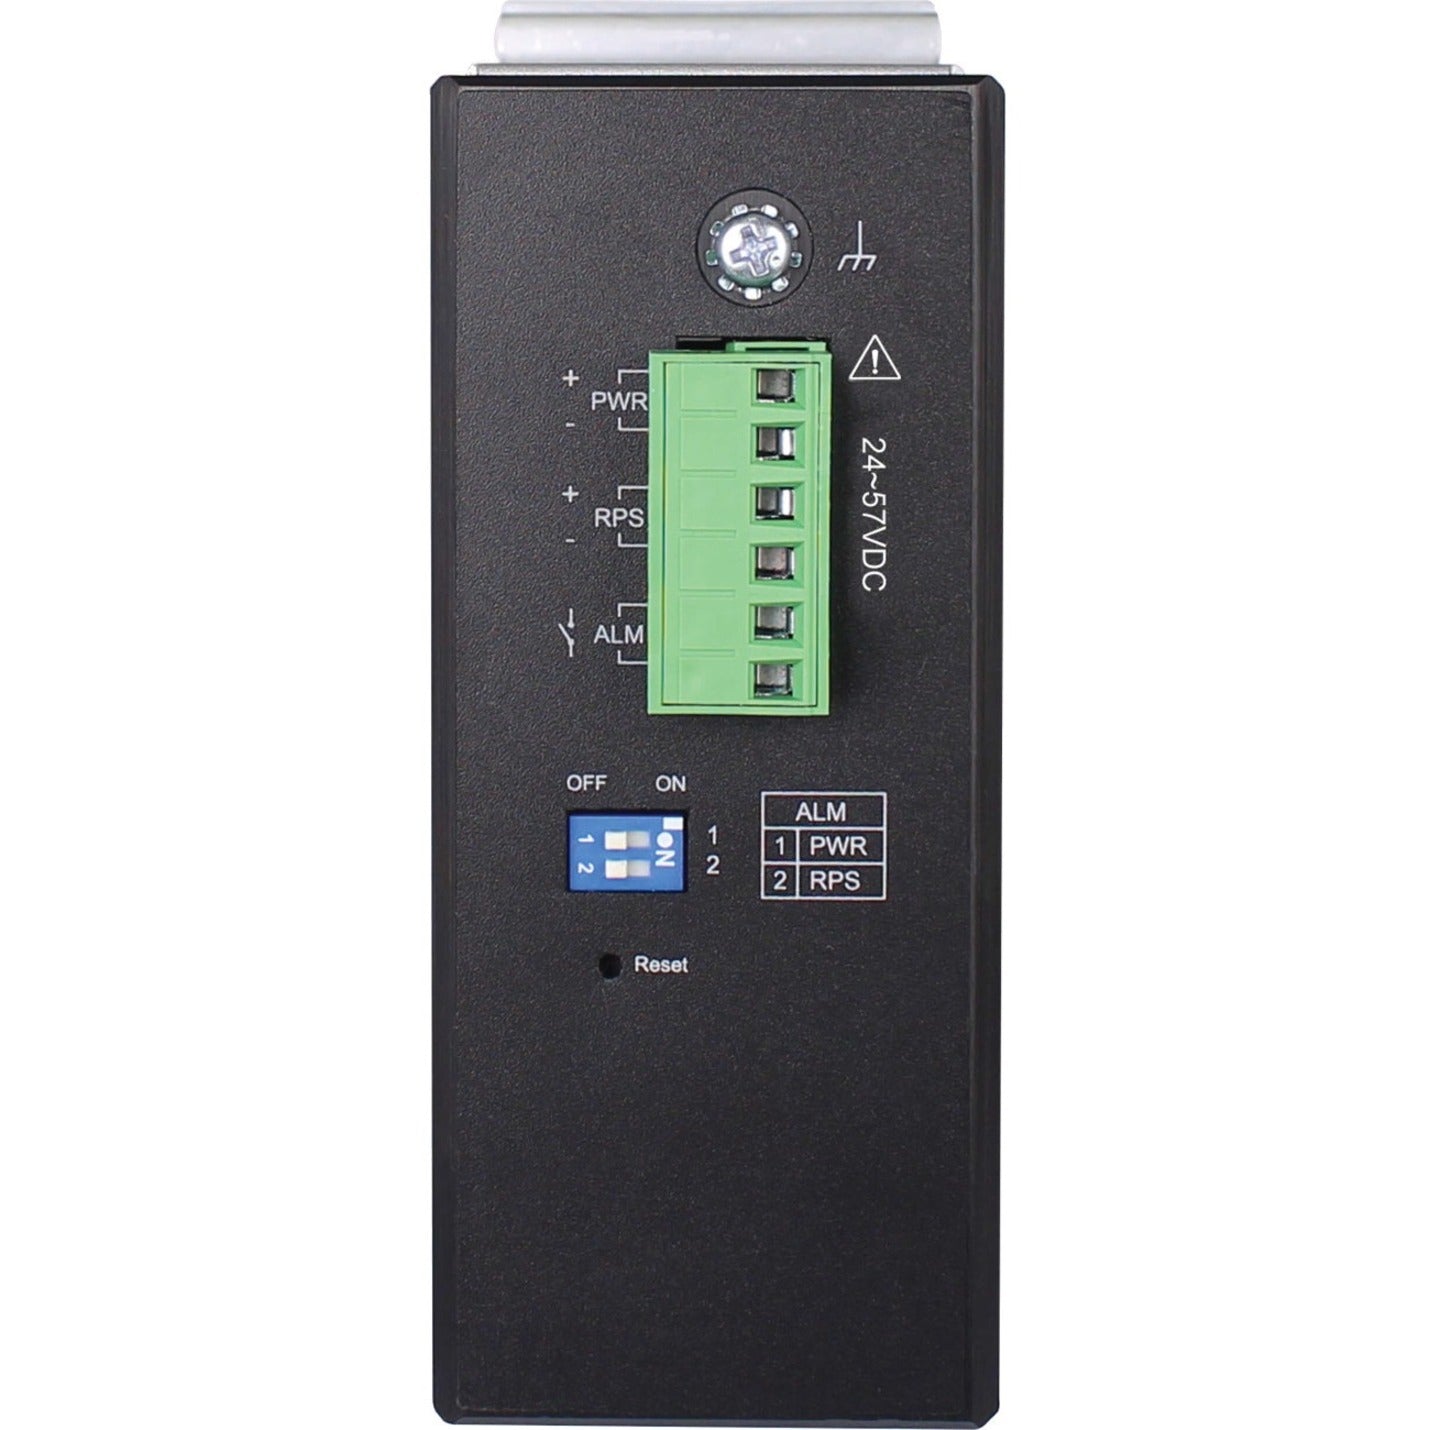 Tripp Lite NGI-M08C4POE8-2 Ethernet Switch, 8-Port Gigabit PoE+ with 4 SFP Slots, TAA Compliant